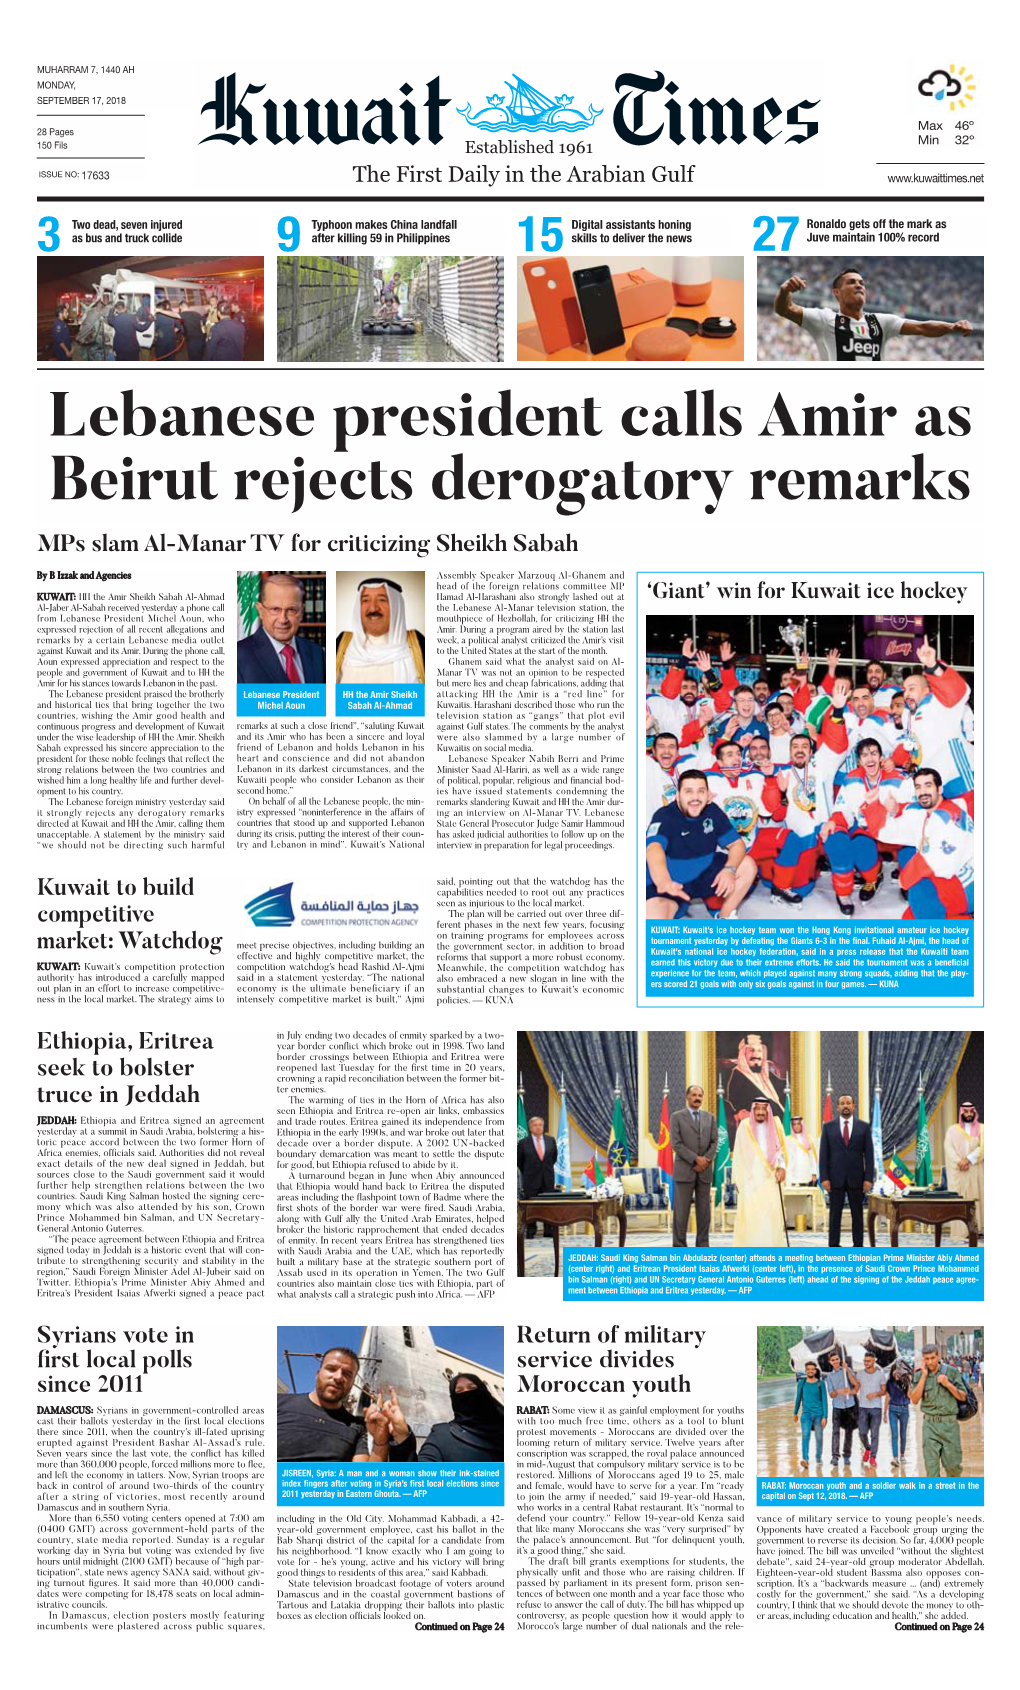 Lebanese President Calls Amir As Beirut Rejects Derogatory Remarks Mps Slam Al-Manar TV for Criticizing Sheikh Sabah